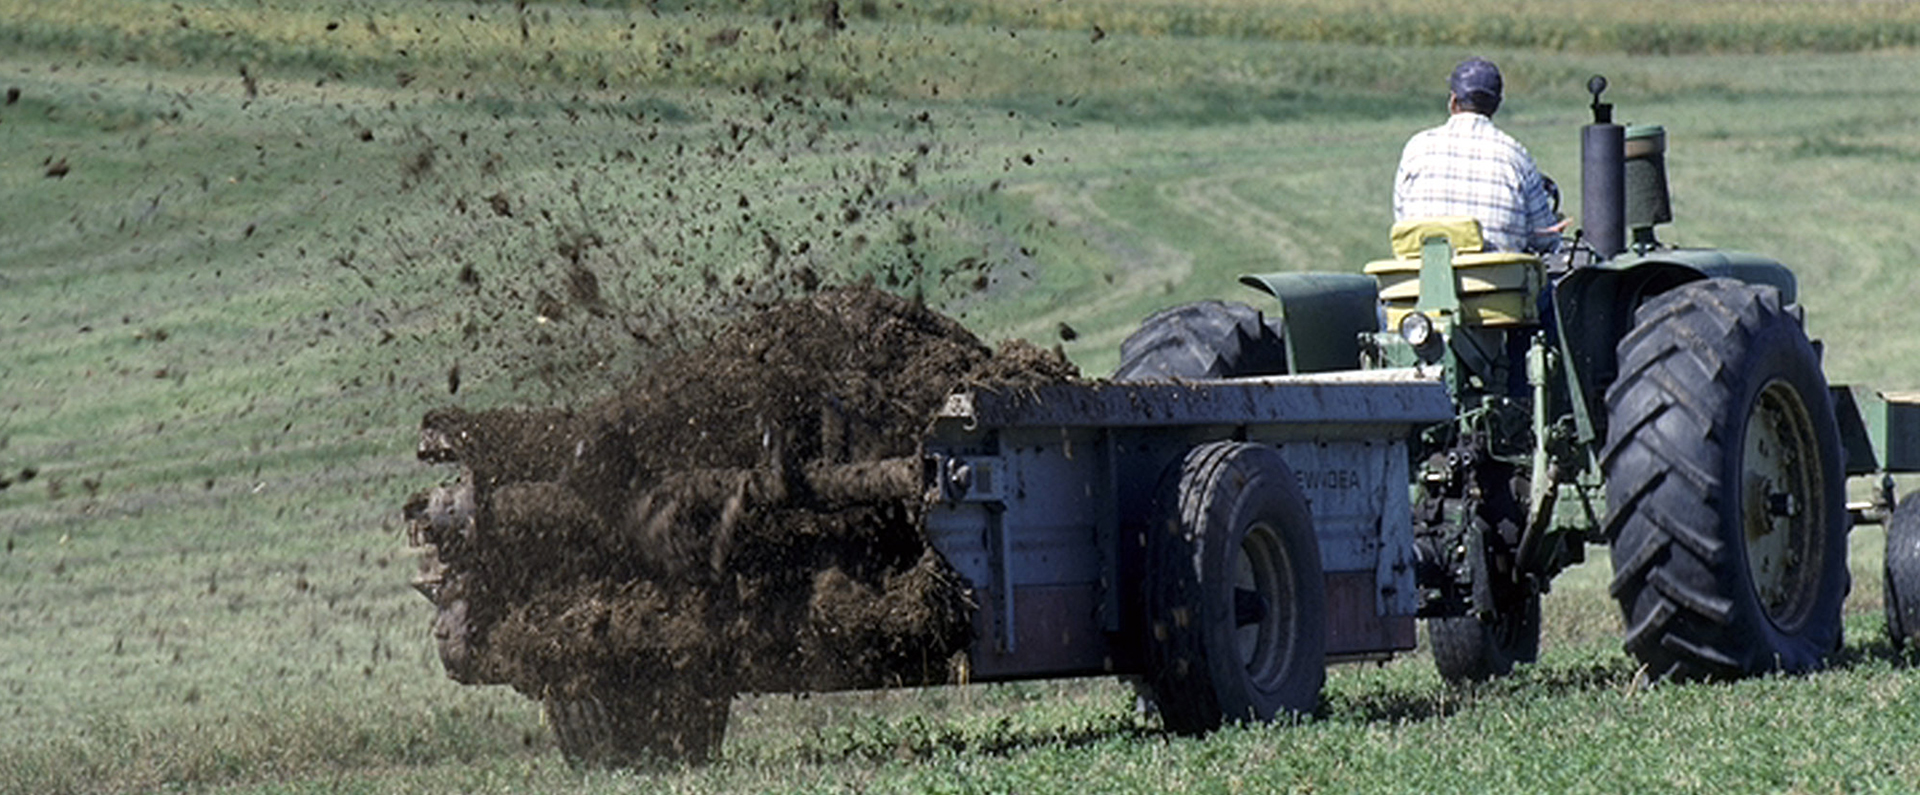 A farmer using a tractor to spread fertilizer